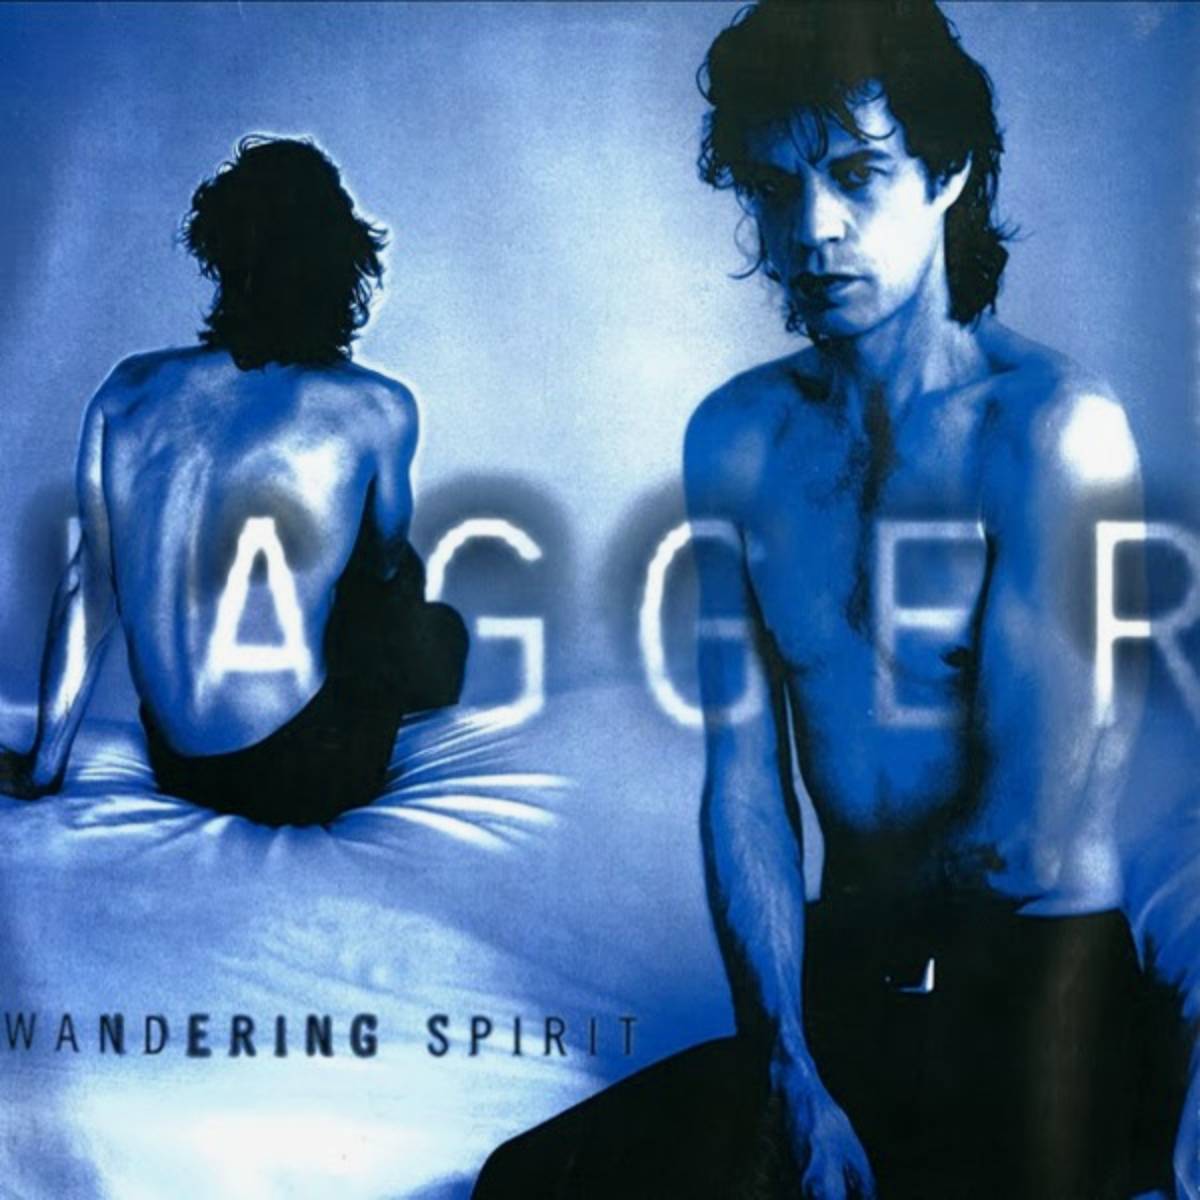 Mick Jagger - "Espírito errante" (1993)